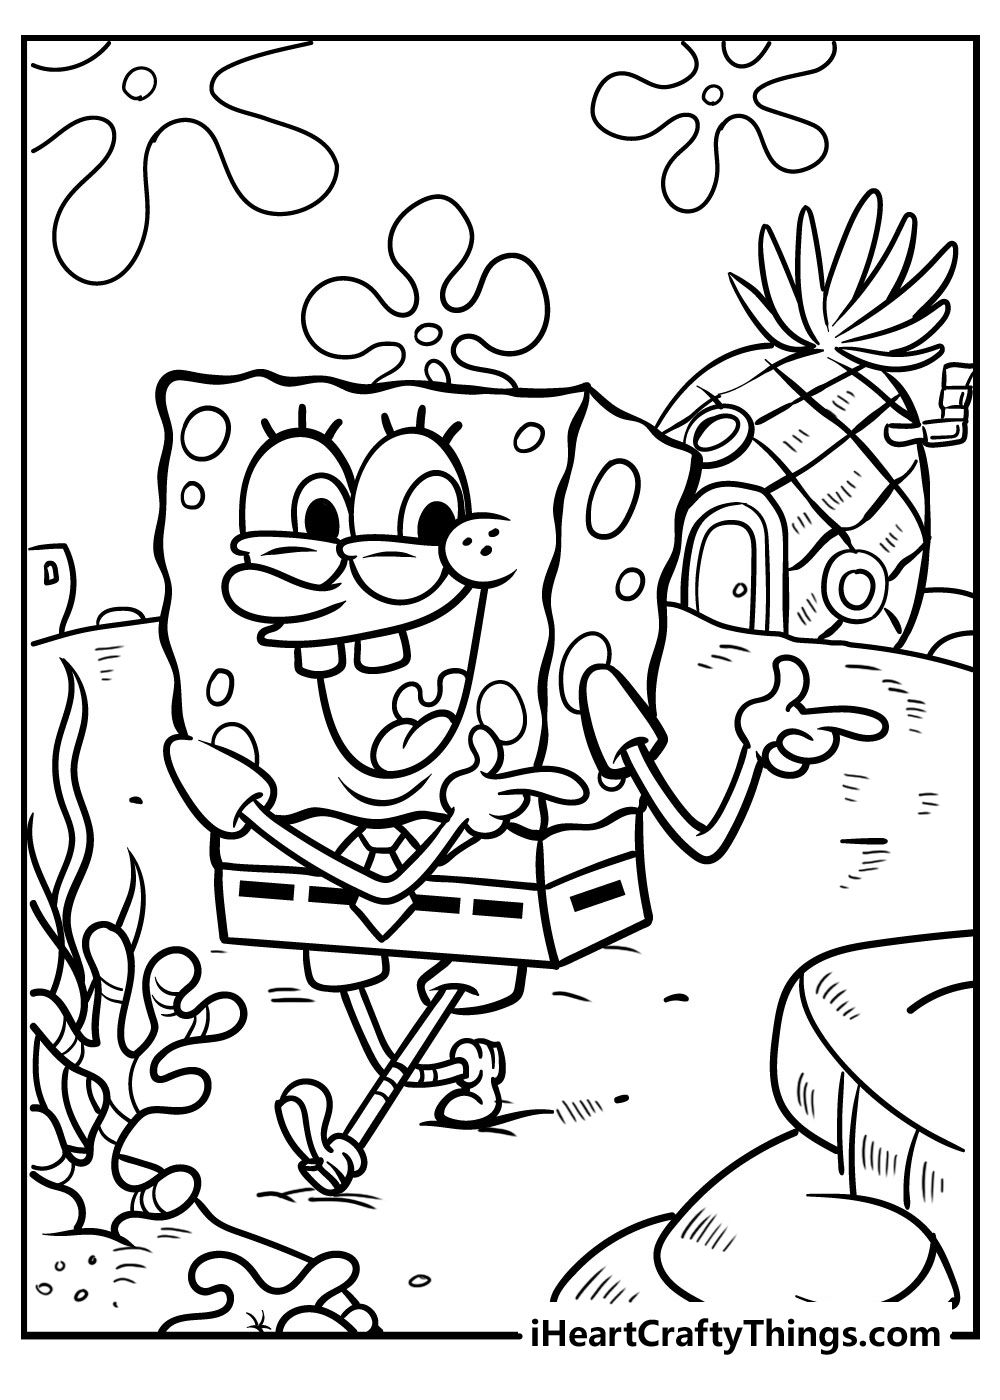 Super Fun Spongebob Coloring Pages